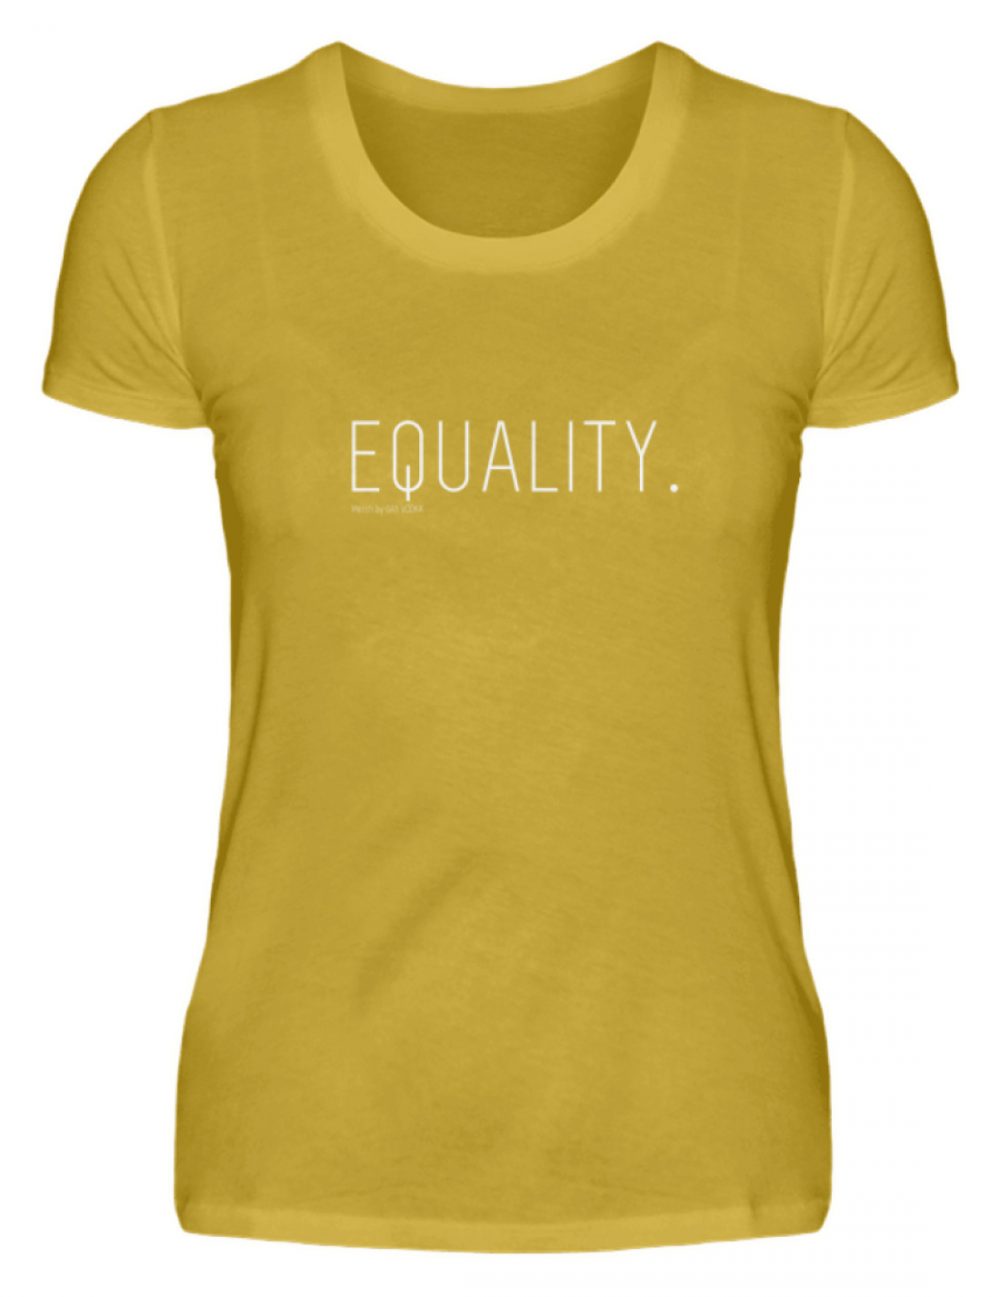 EQUALITY. - Damen Premiumshirt-2980